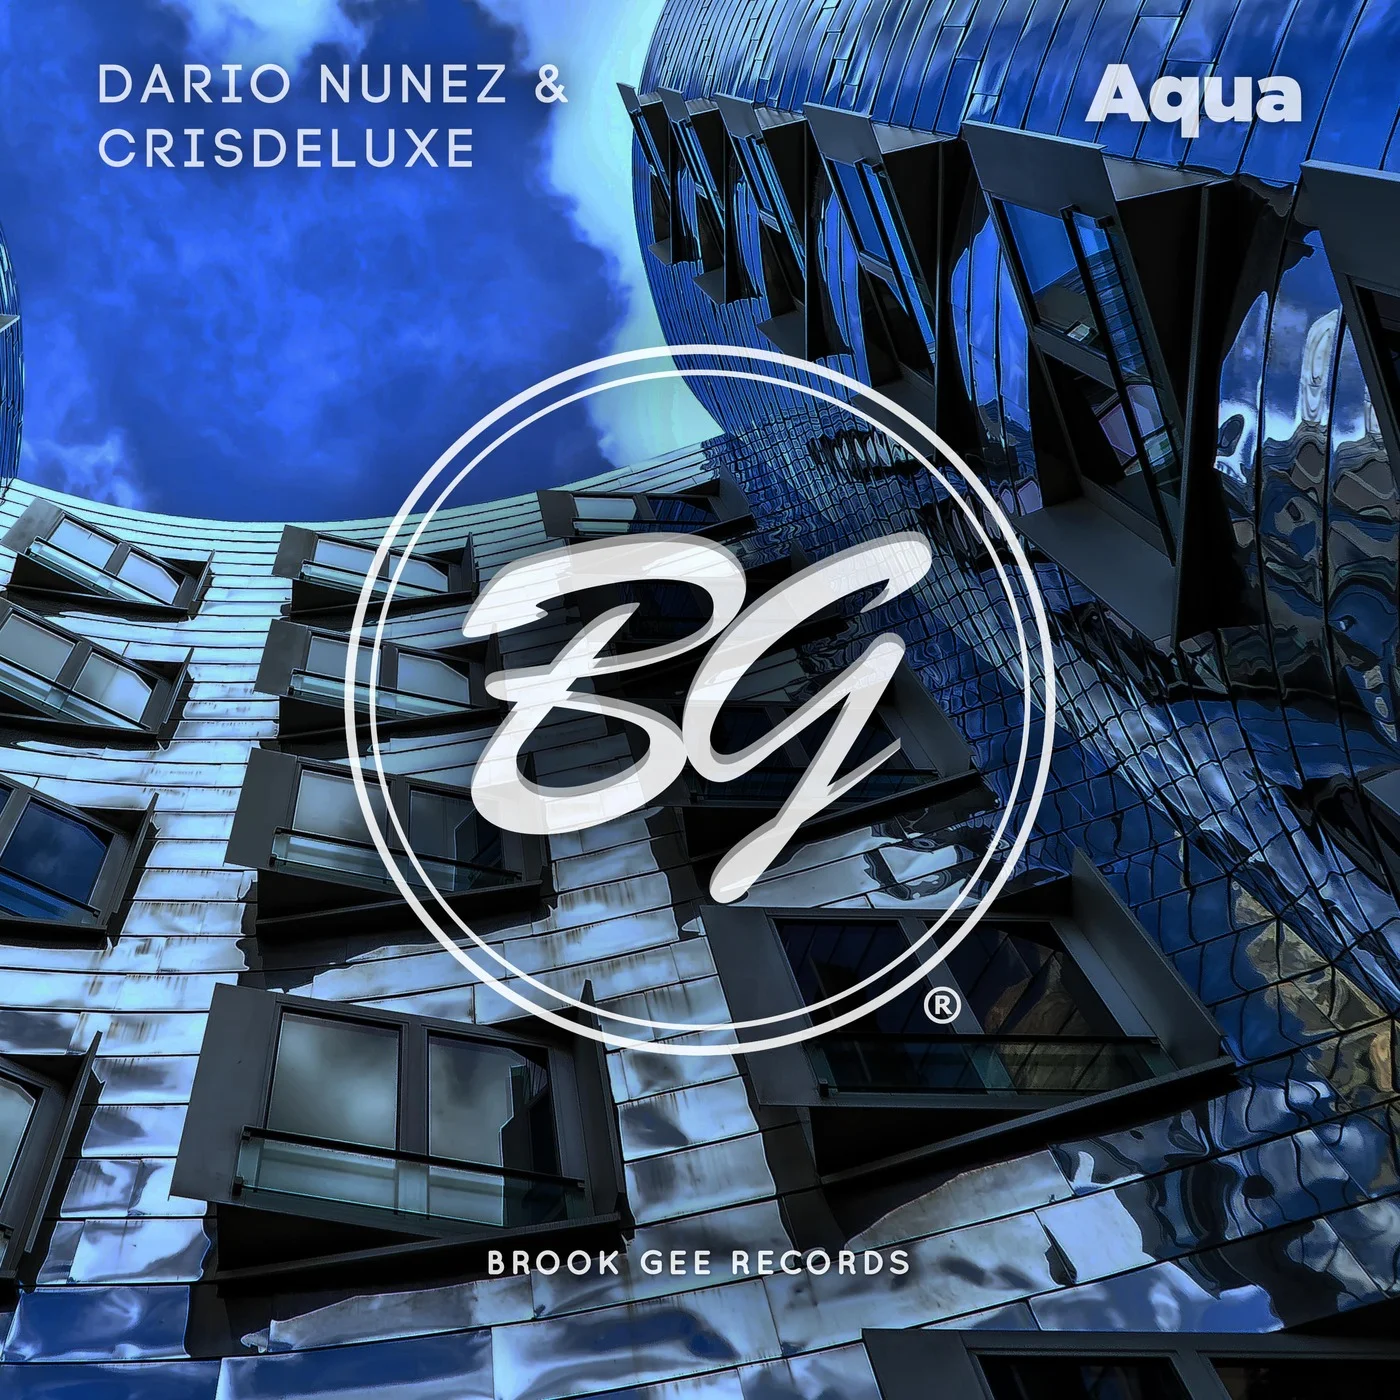 Dario Nunez & Crisdeluxe's latest single "Aqua" is now available on Brook Gee Records